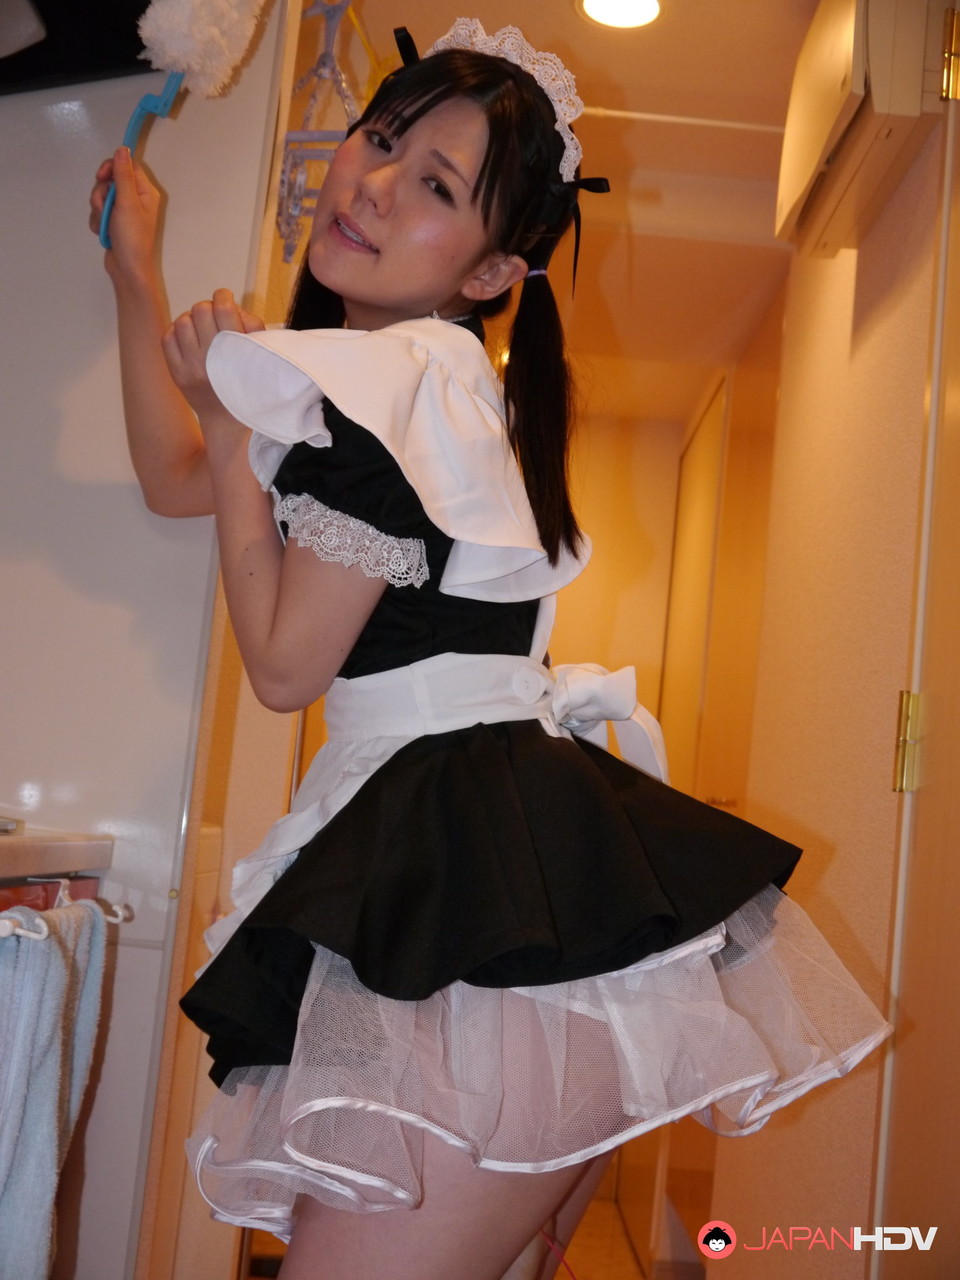 Young Asian maid Mai Araki gets her teen twat licked after sucking a dick порно фото #426123057 | Japan HDV Pics, Mai Araki, Mom, мобильное порно